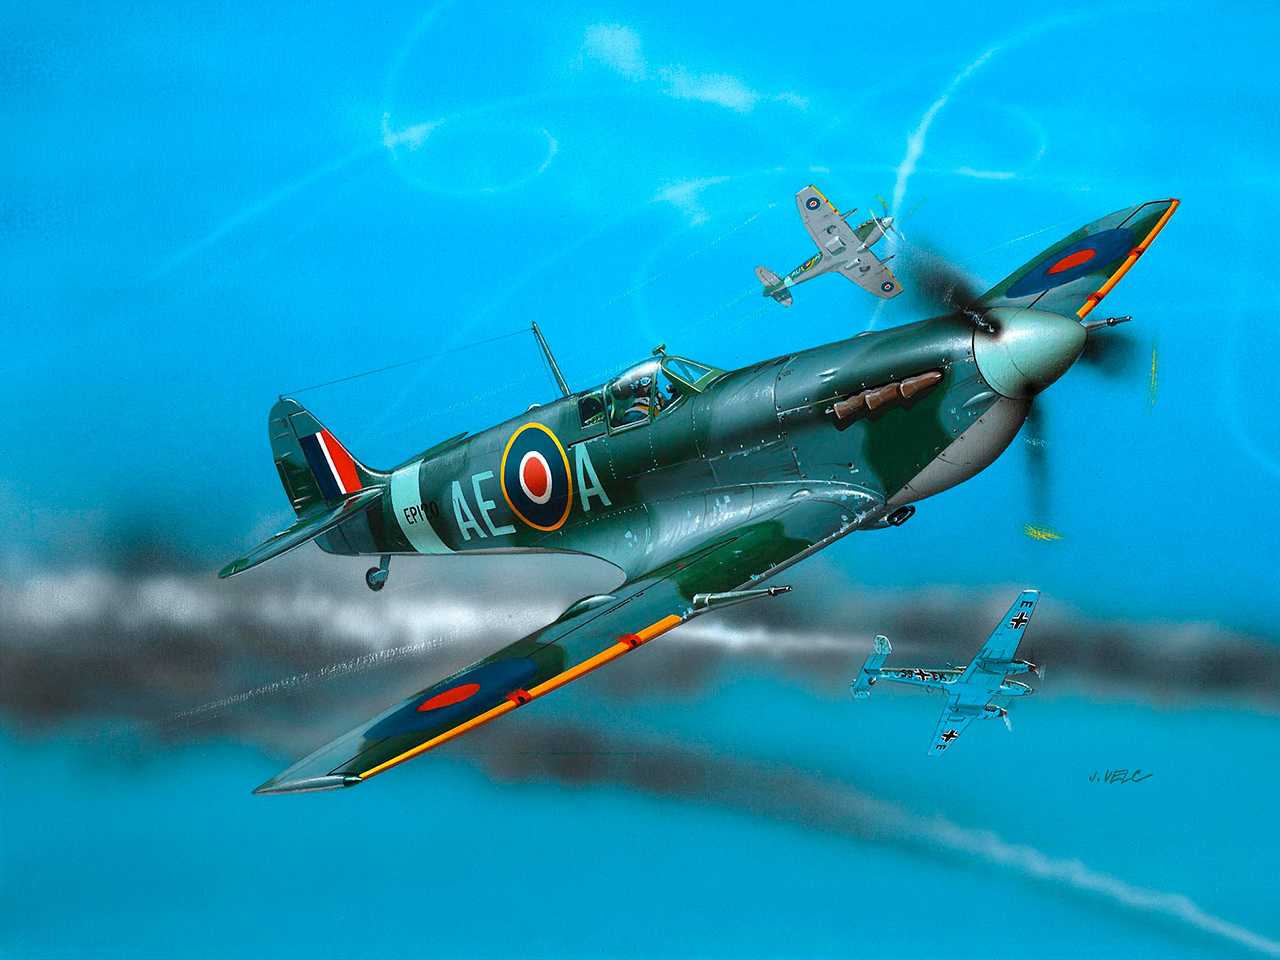 1:72 Supermarine Spitfire Mk V